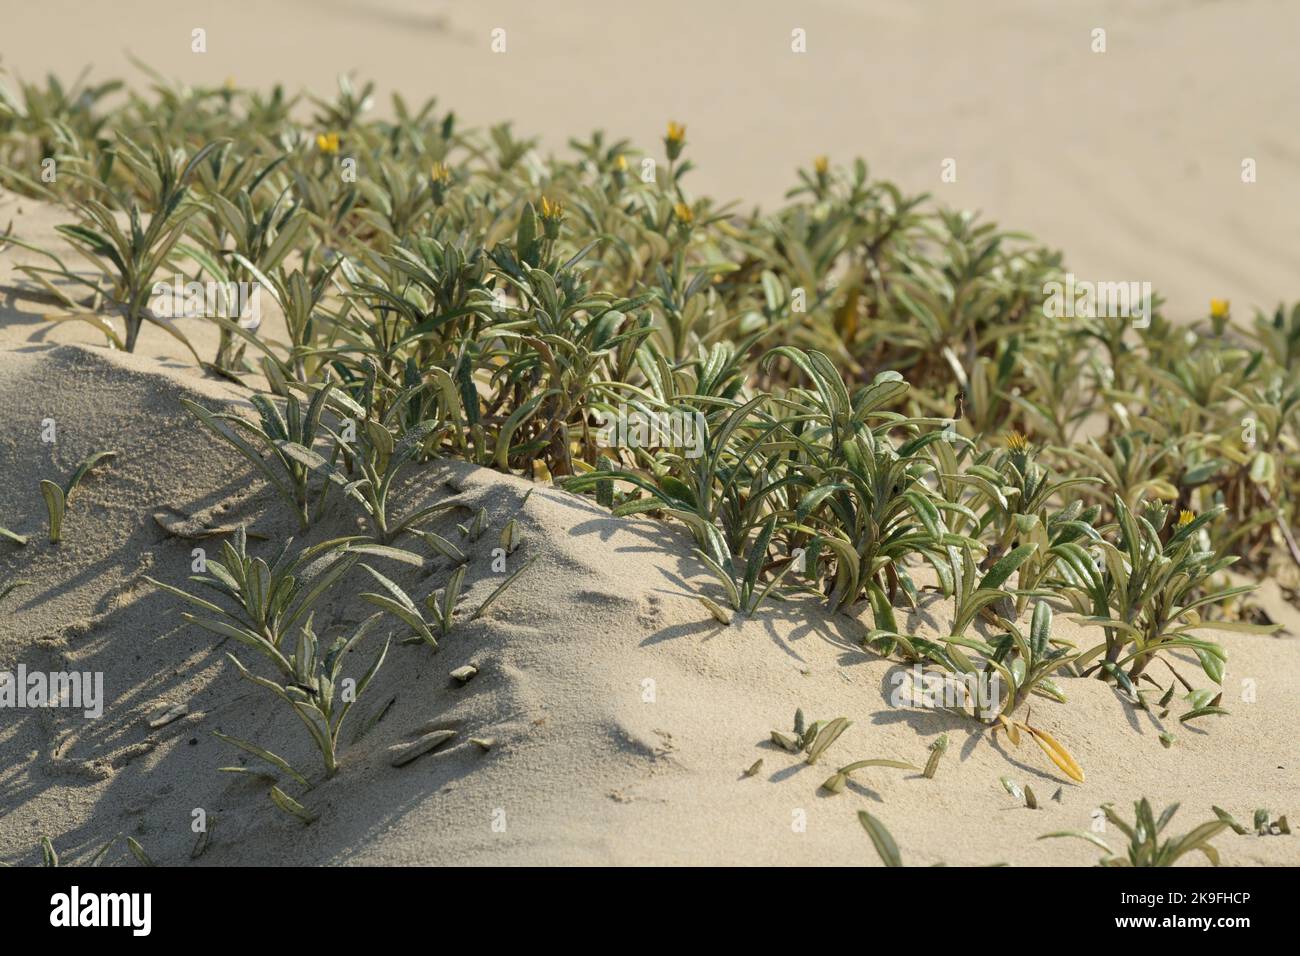 Pioneer dune vegetation in beach sand, Common Gazania, Gazania krebsiana, Durban, South Africa, flowering plant, minimal landscape, survival struggle Stock Photo